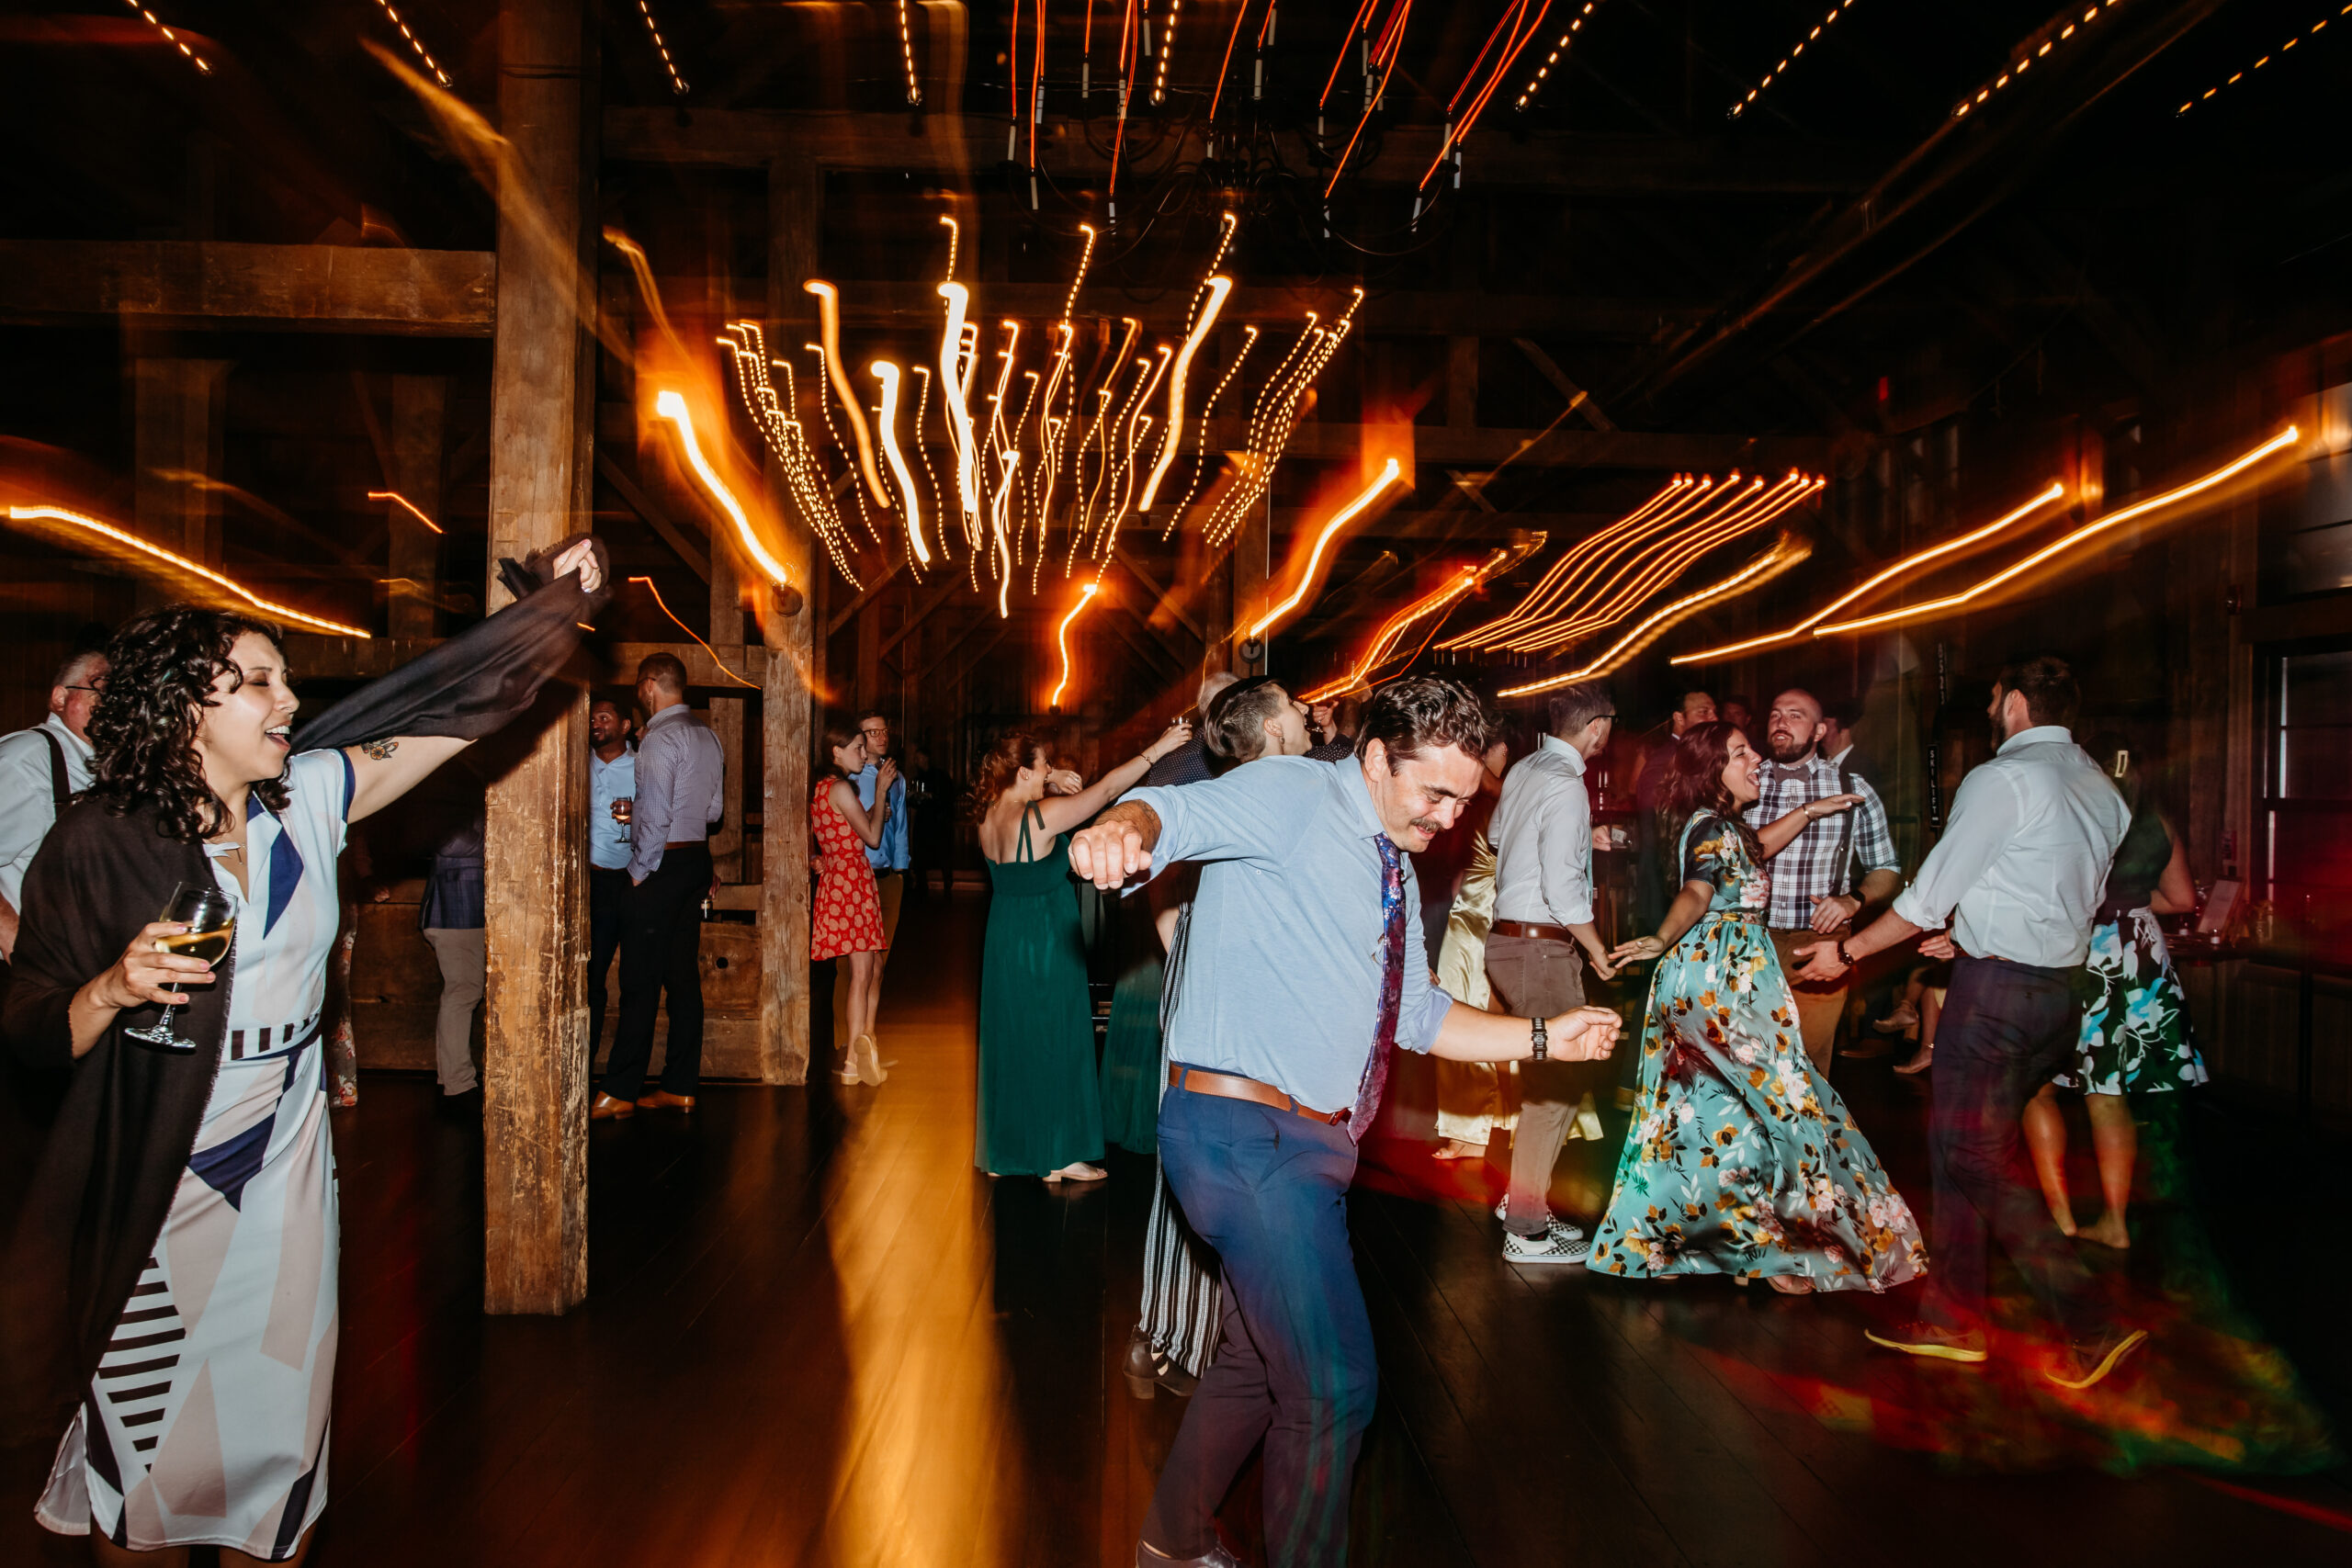 Guests dancing inside on the wedding barn's dancefloor